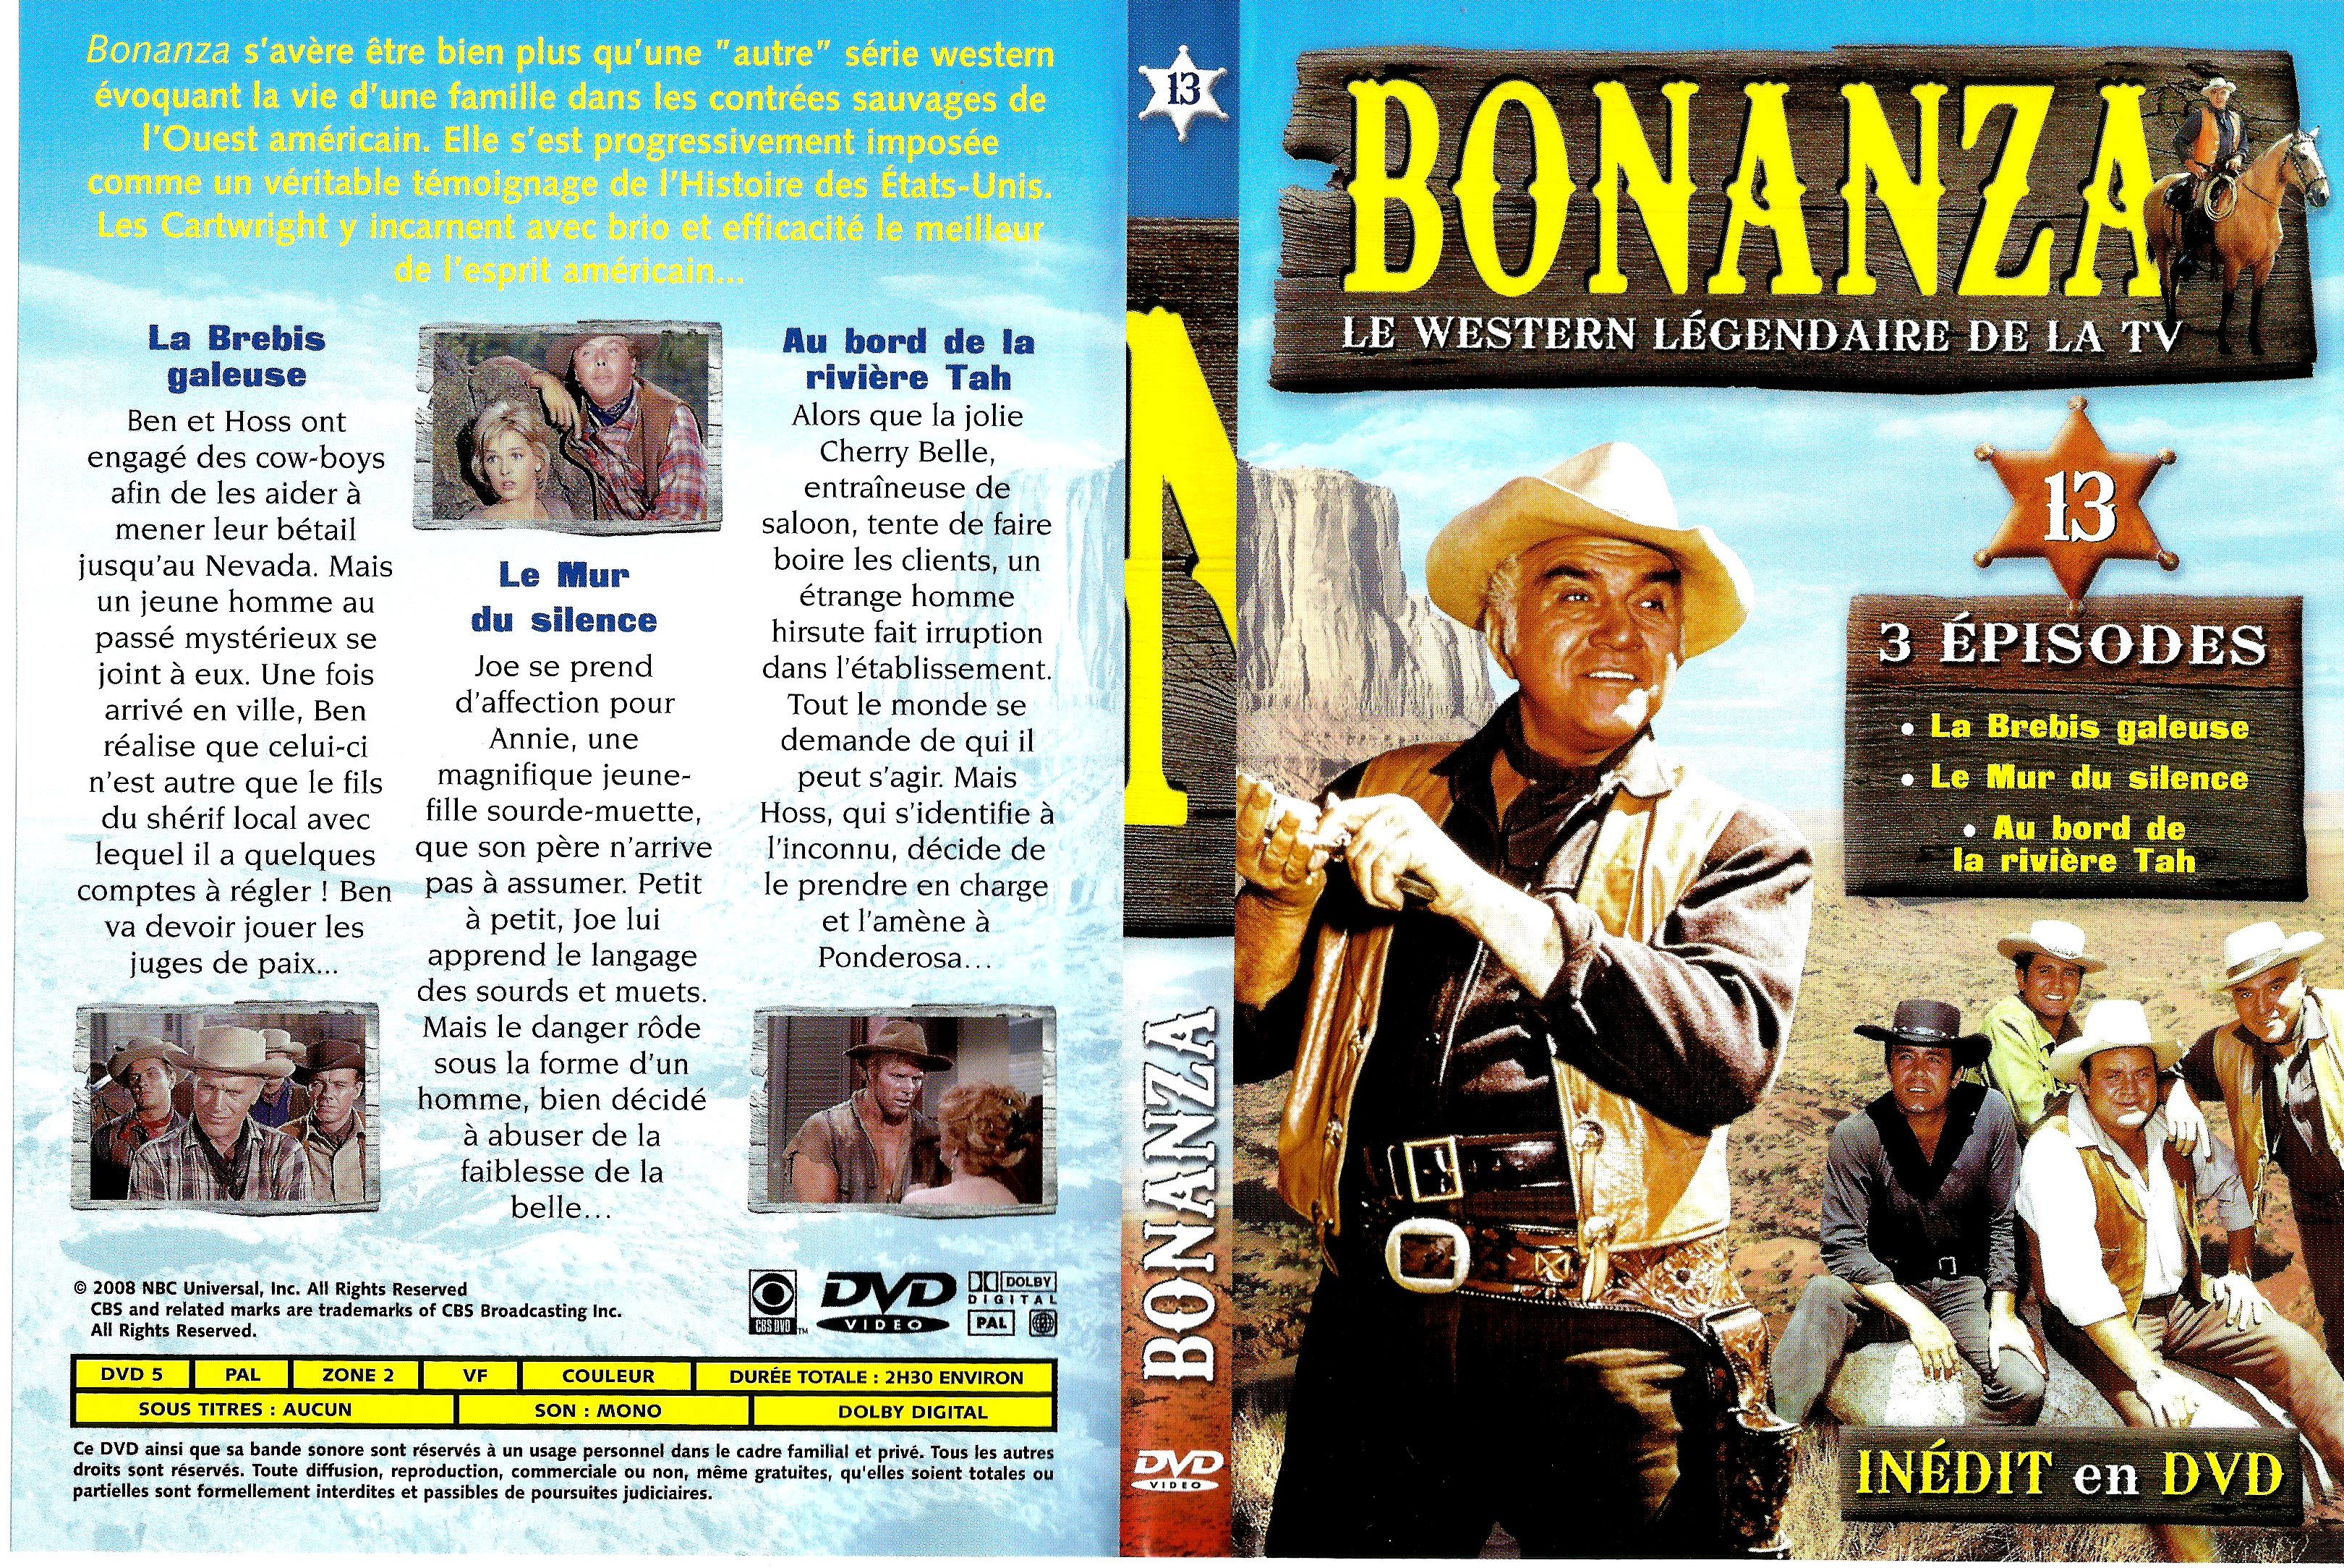 Jaquette DVD Bonanza vol 13